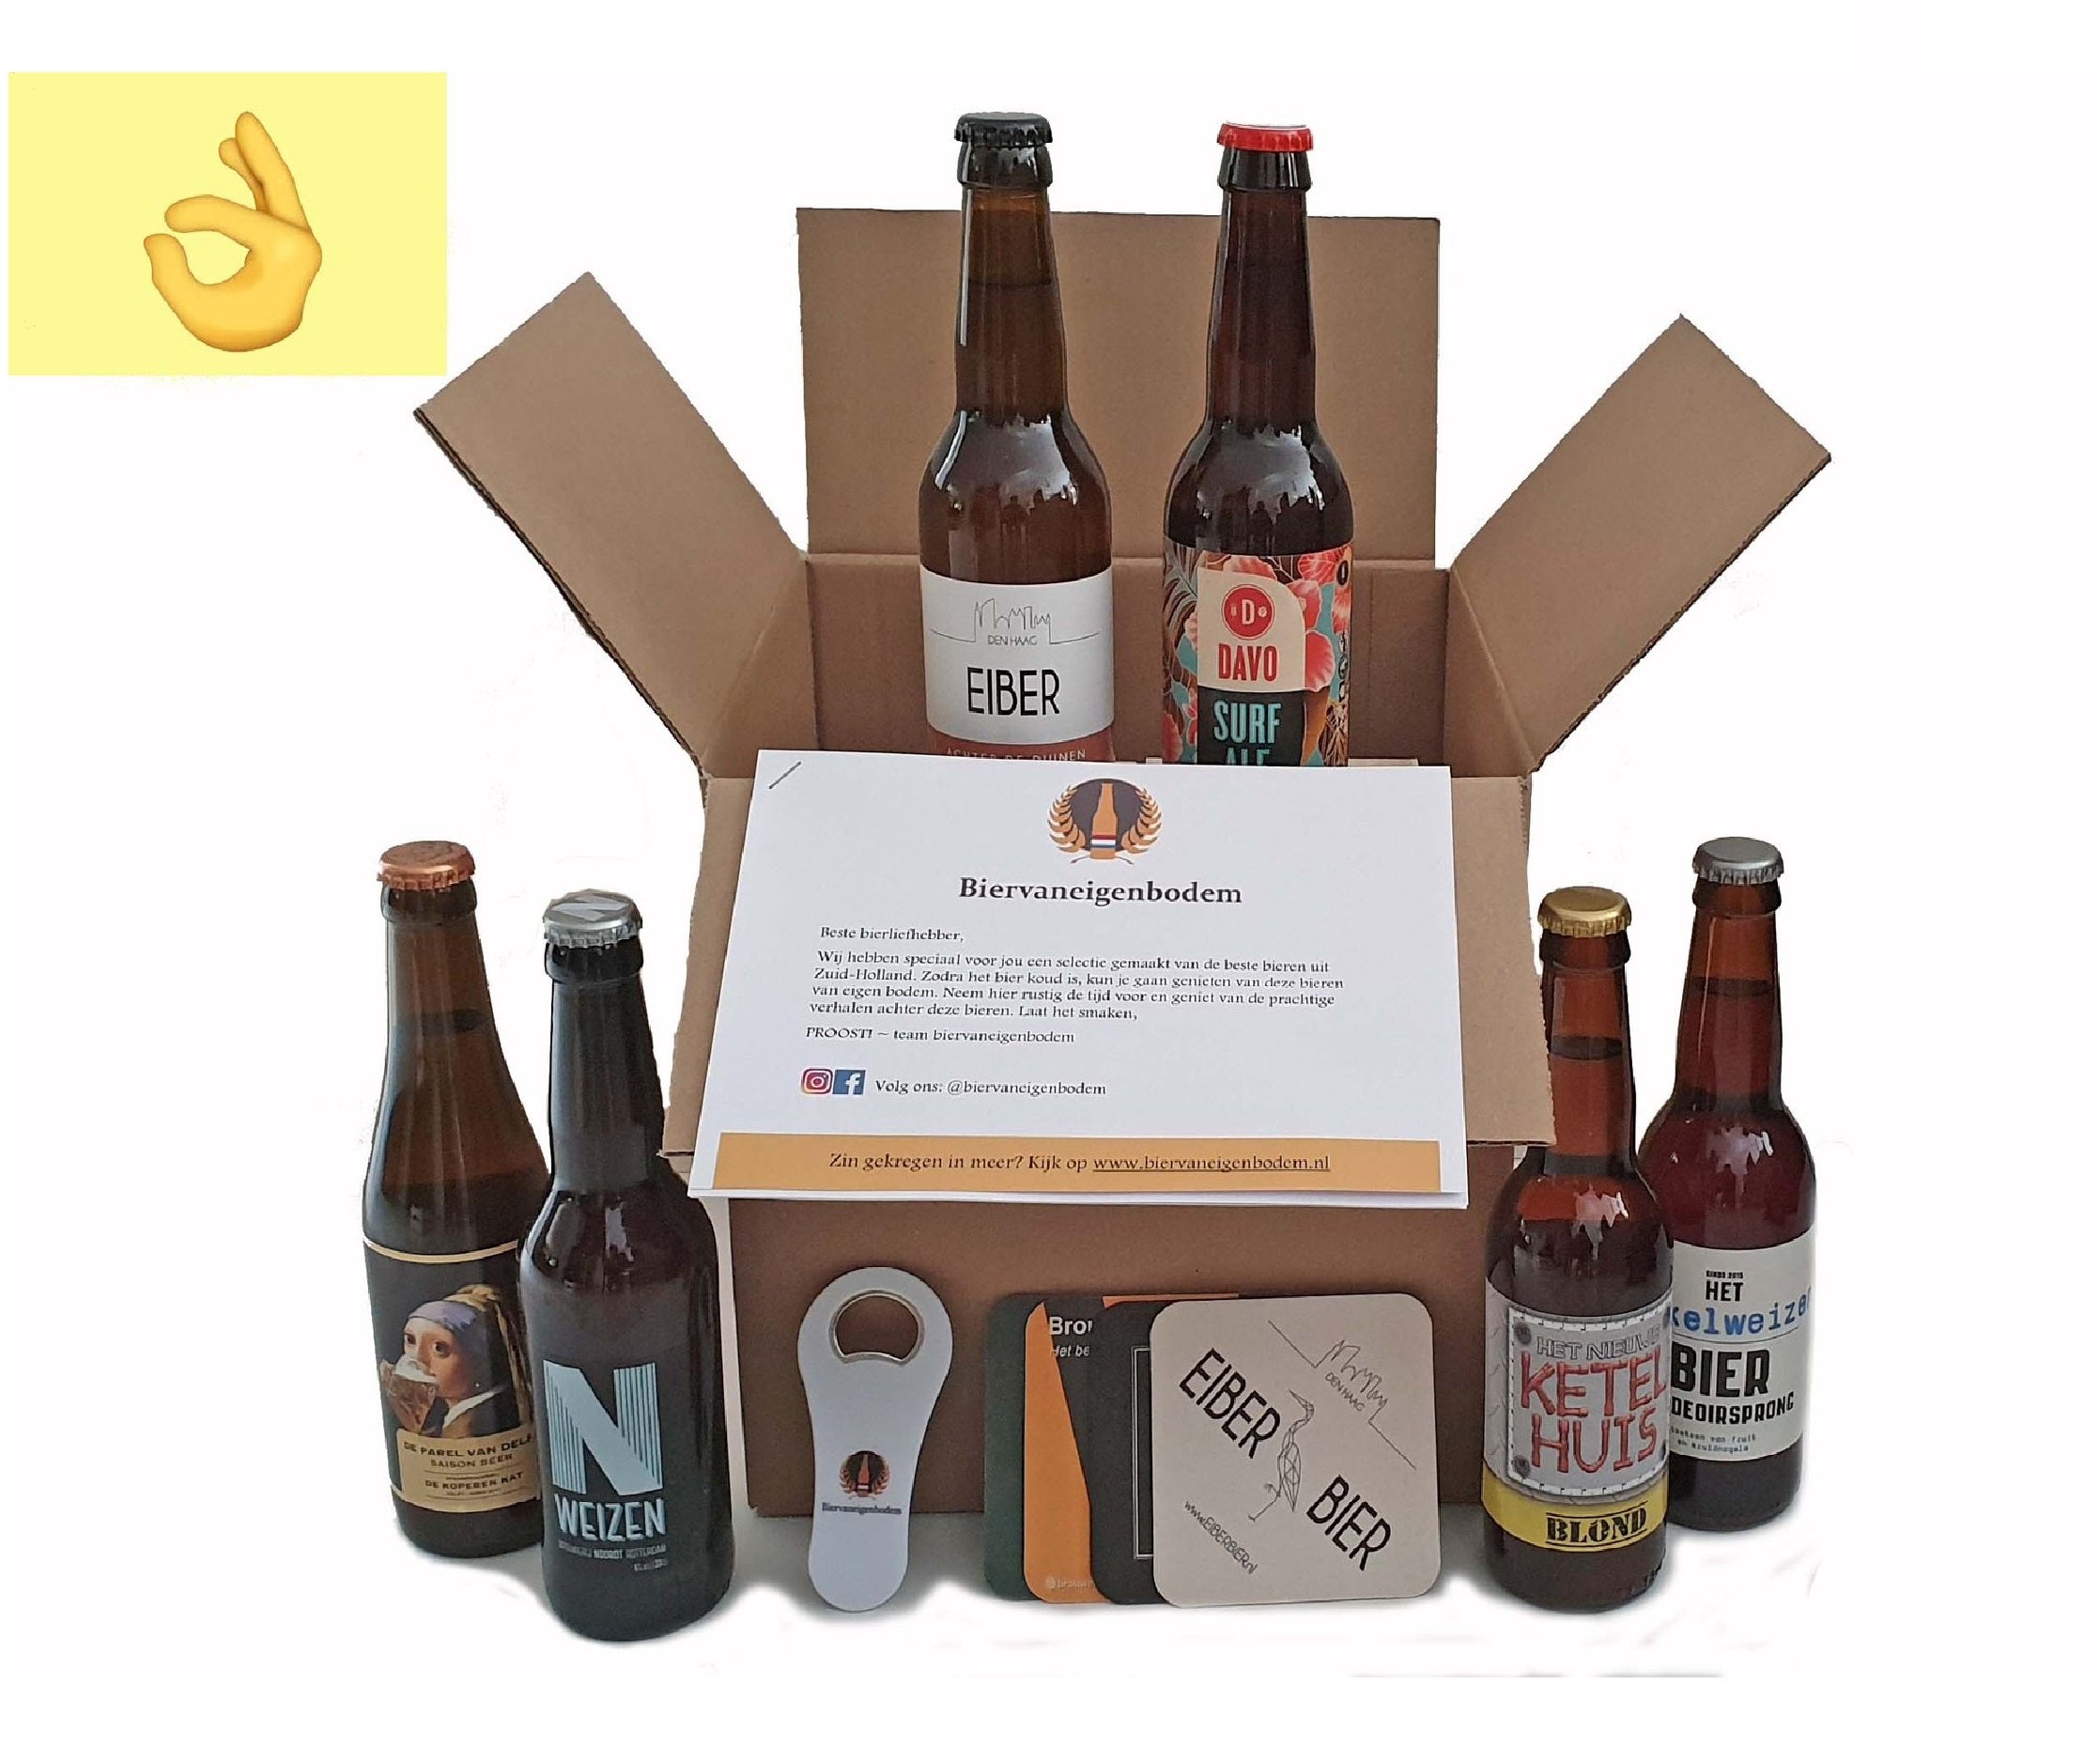 Majestueus pijn Penetratie Bier proefpakket & Speciaalbier pakket | #1 in Biervaneigenbodem – Getagged  "bierkado"